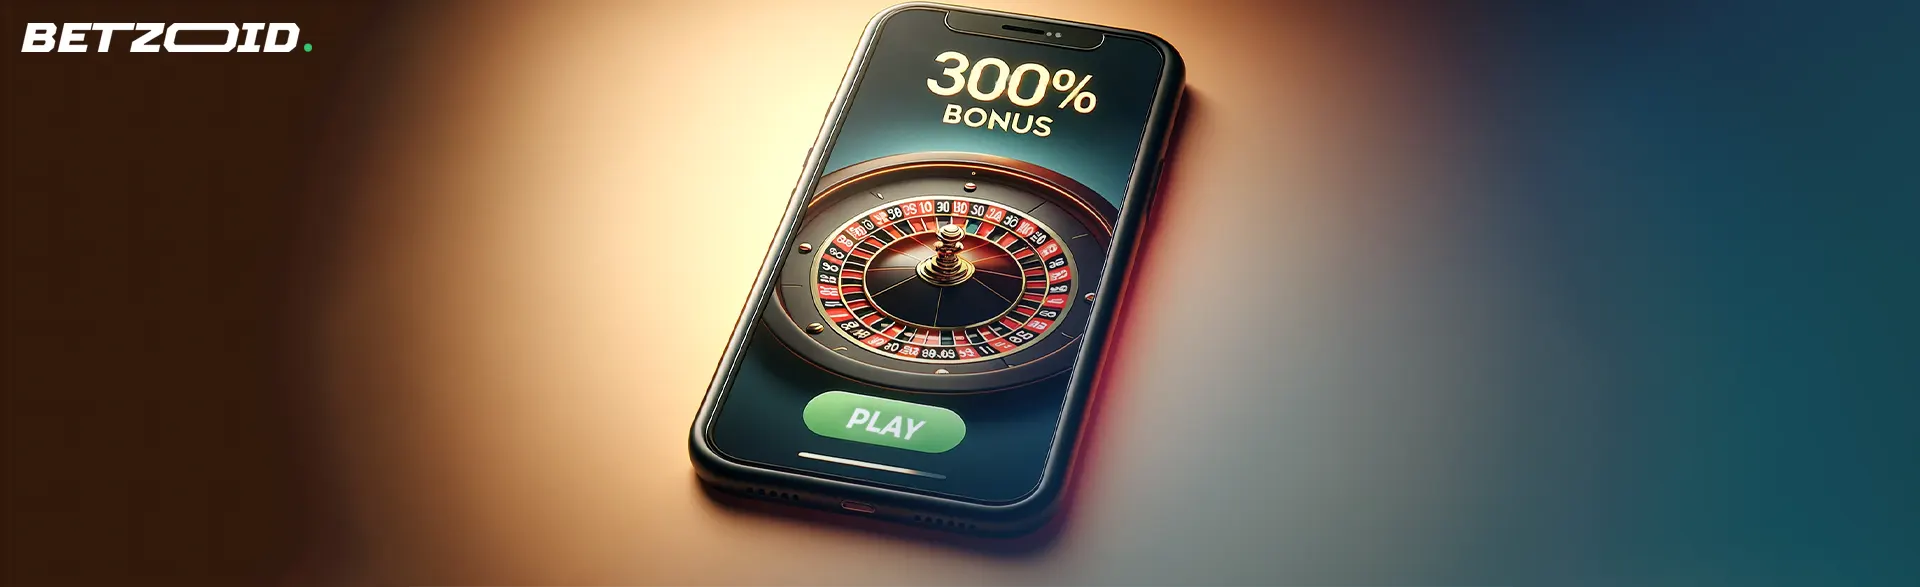 300% bonus online casinos on mobile smartphone.